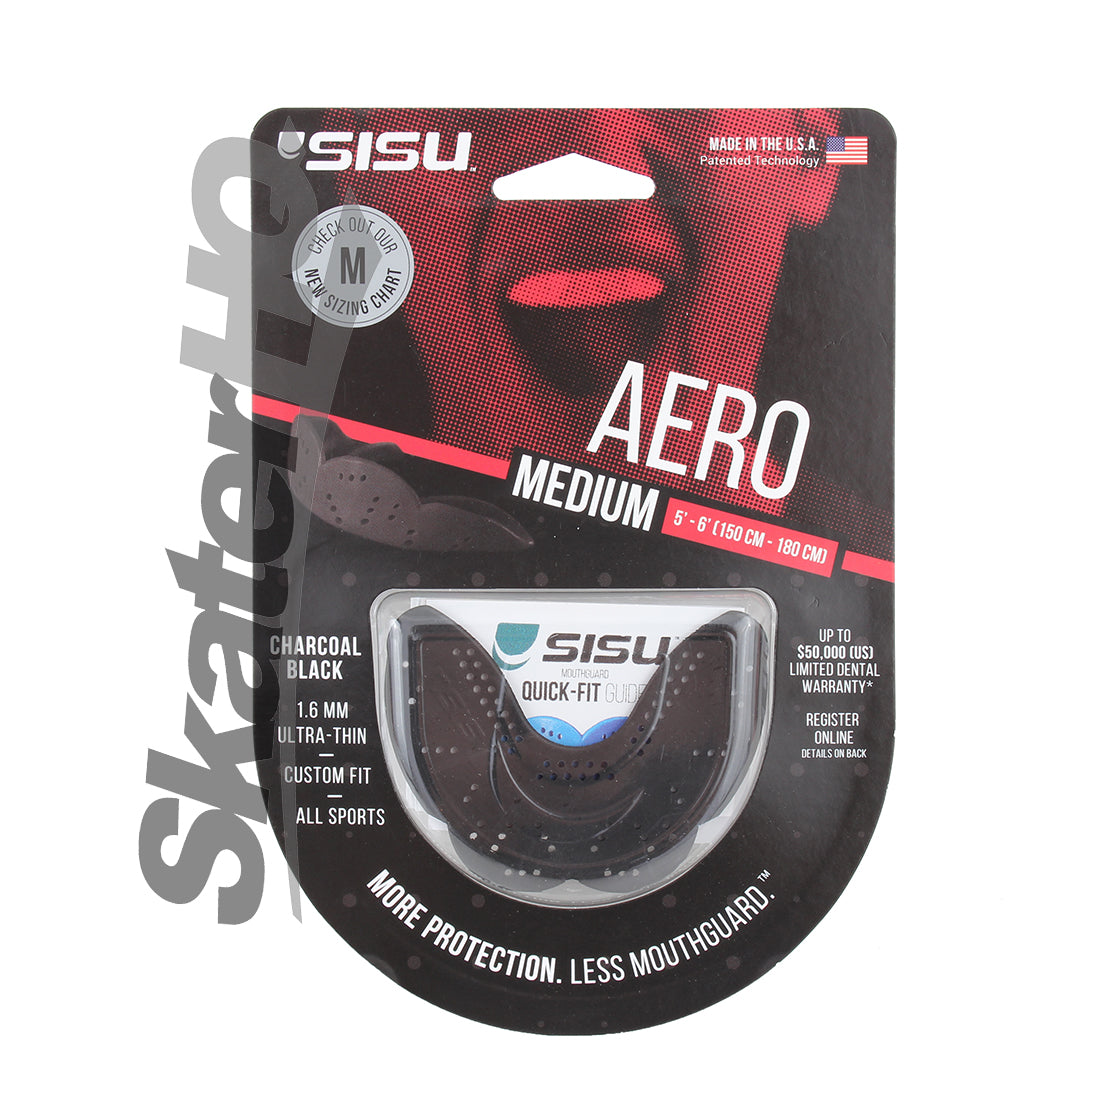 SISU AERO Mouthguard 1.6 Medium - Charcoal Black Protective - Mouthguards